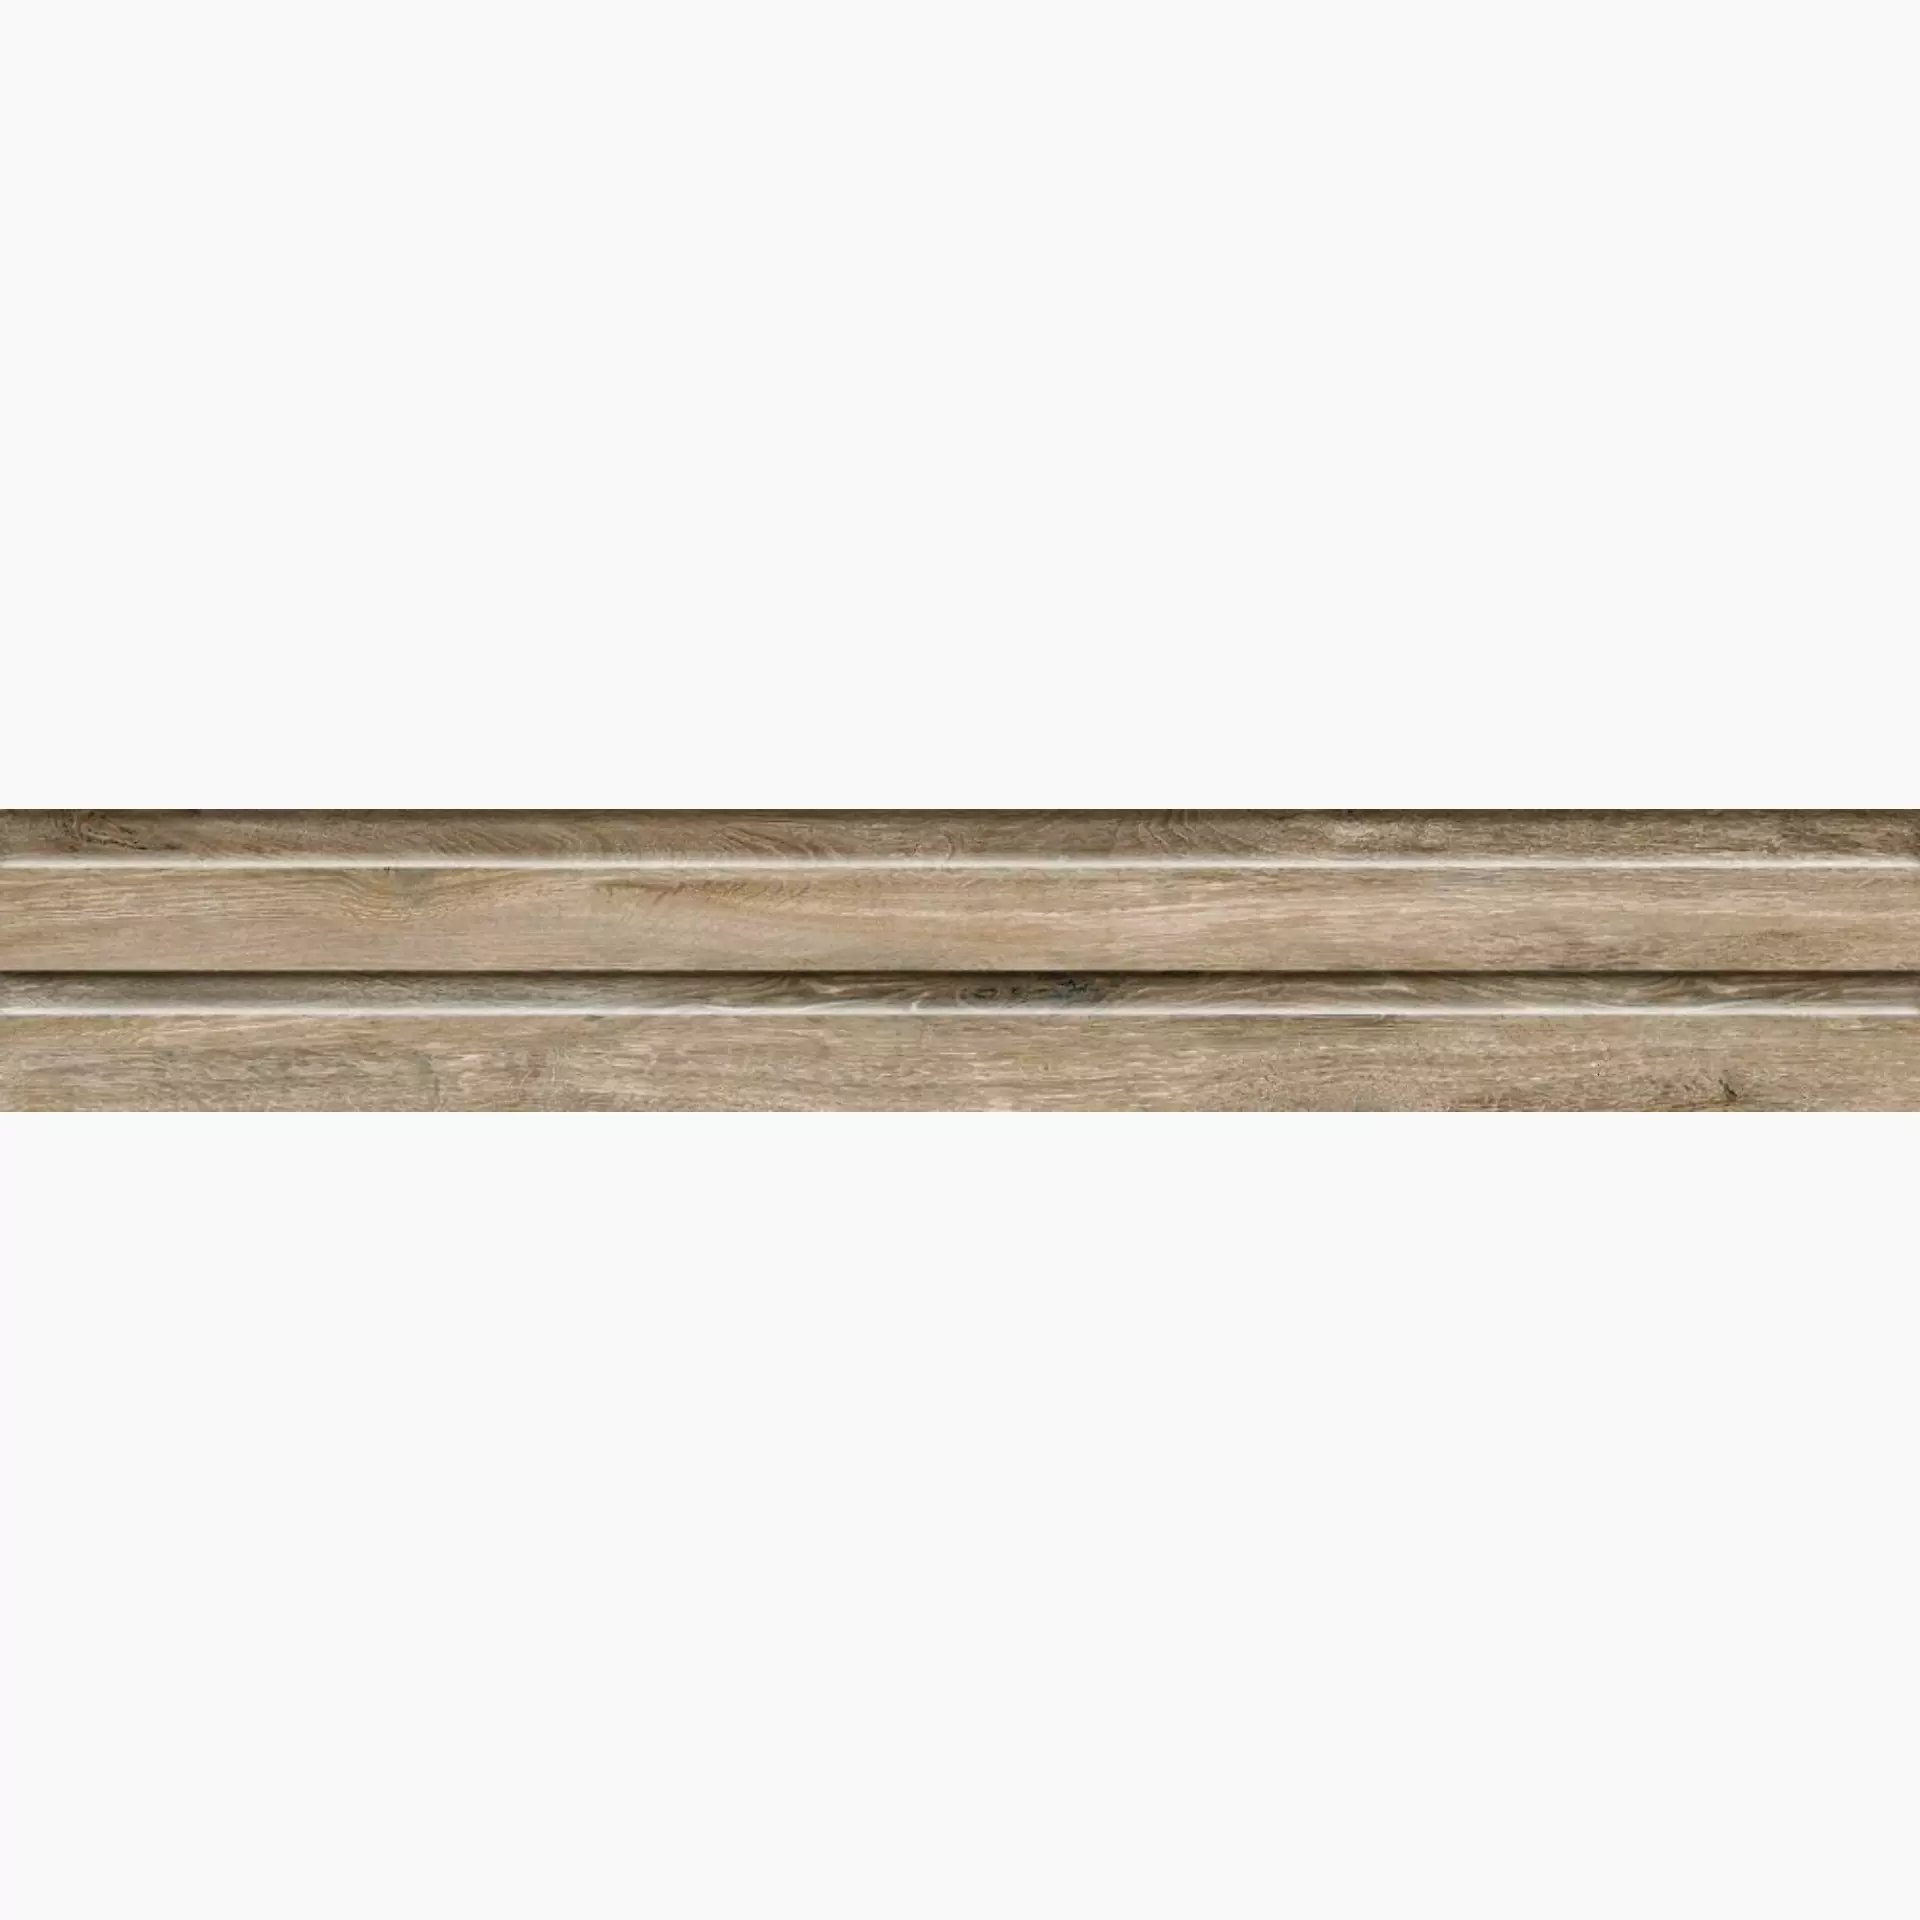 Monocibec Woodtime Iroko Naturale Decor Maxi 0089620 19x120cm rectified 9mm